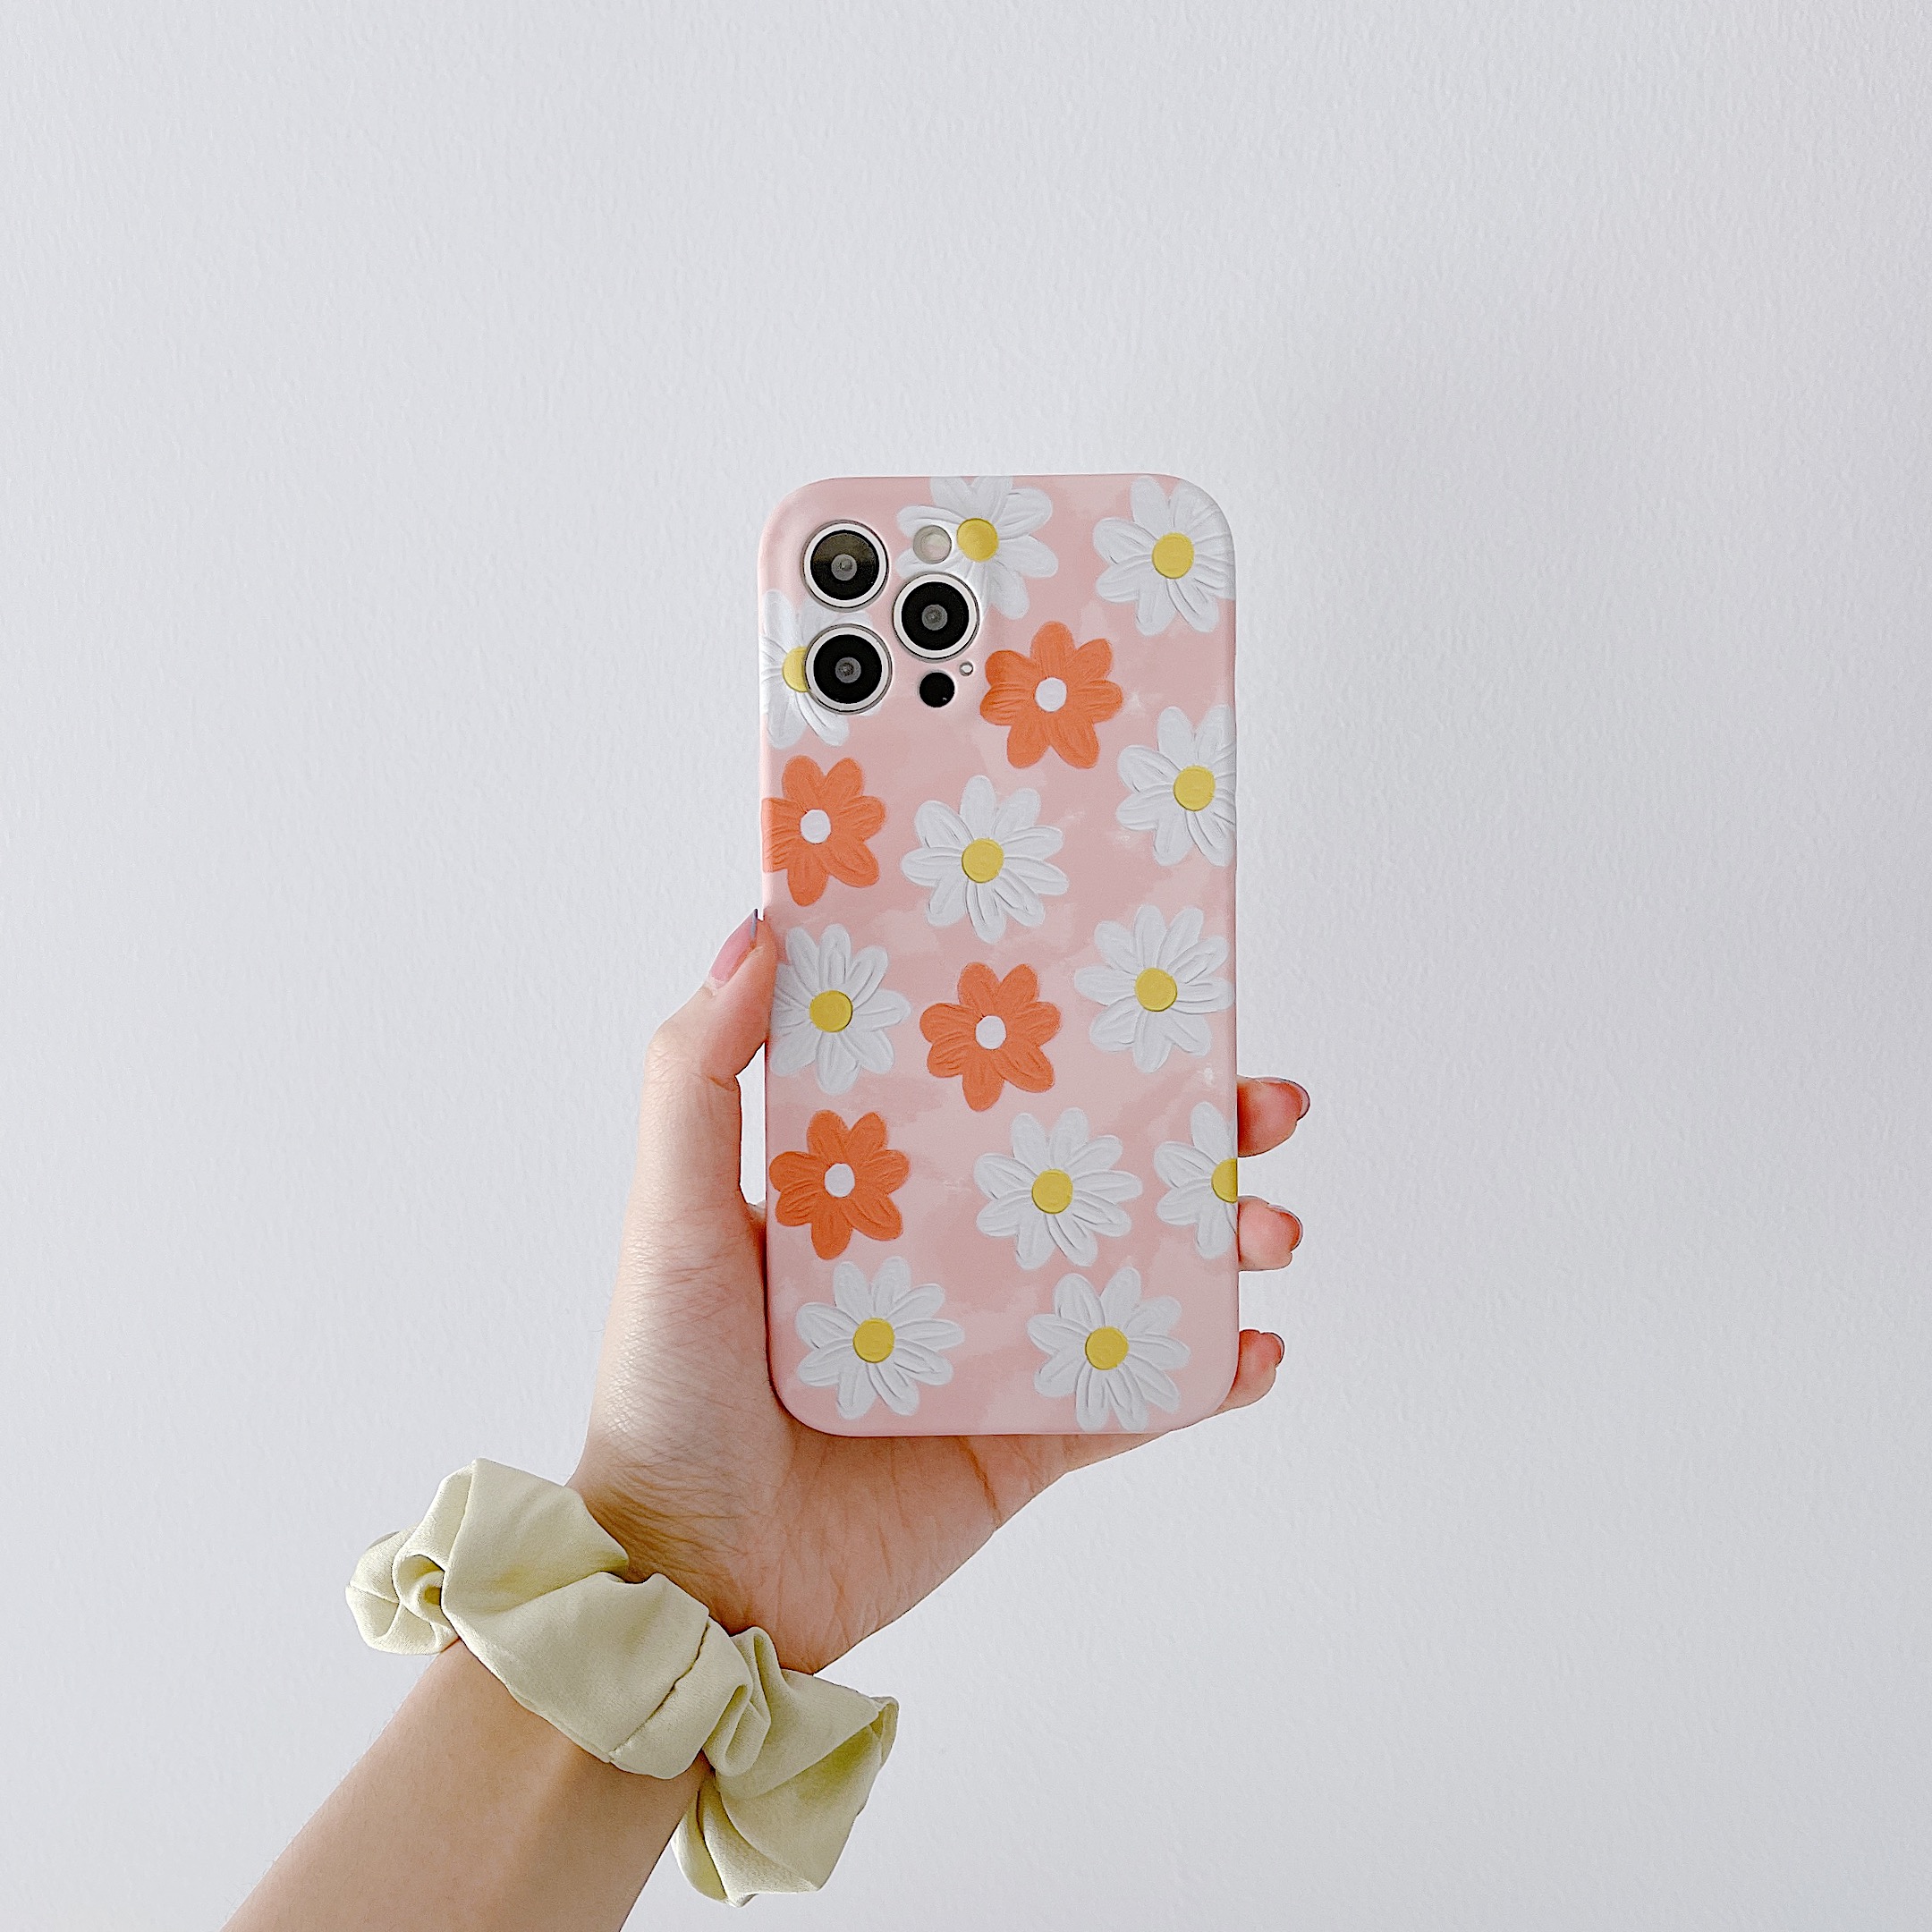 New Design Huawei Mate 40 30 P30 Lite P40 Pro P Smart Plus Y7 Pro Y9 Prime 2019 Casing Shockproof Soft Matte Case Pink Daisy Flower Floral Oil Painting Art Fashion Phone Cover